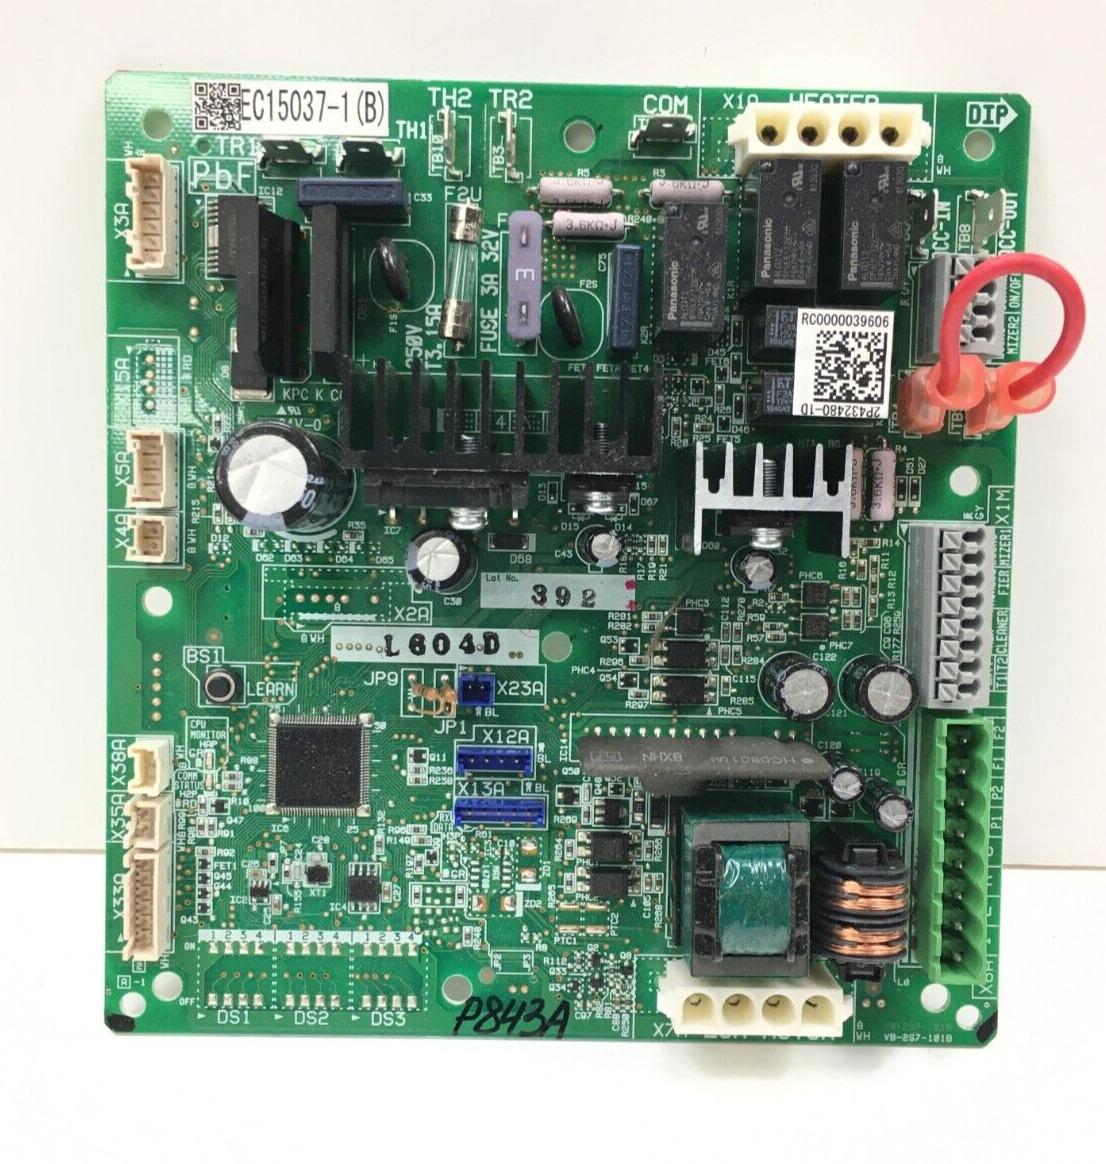 Daikin Circuit Control Board HVAC EC15037-1 (B) 2P432480-1D  used #P843A